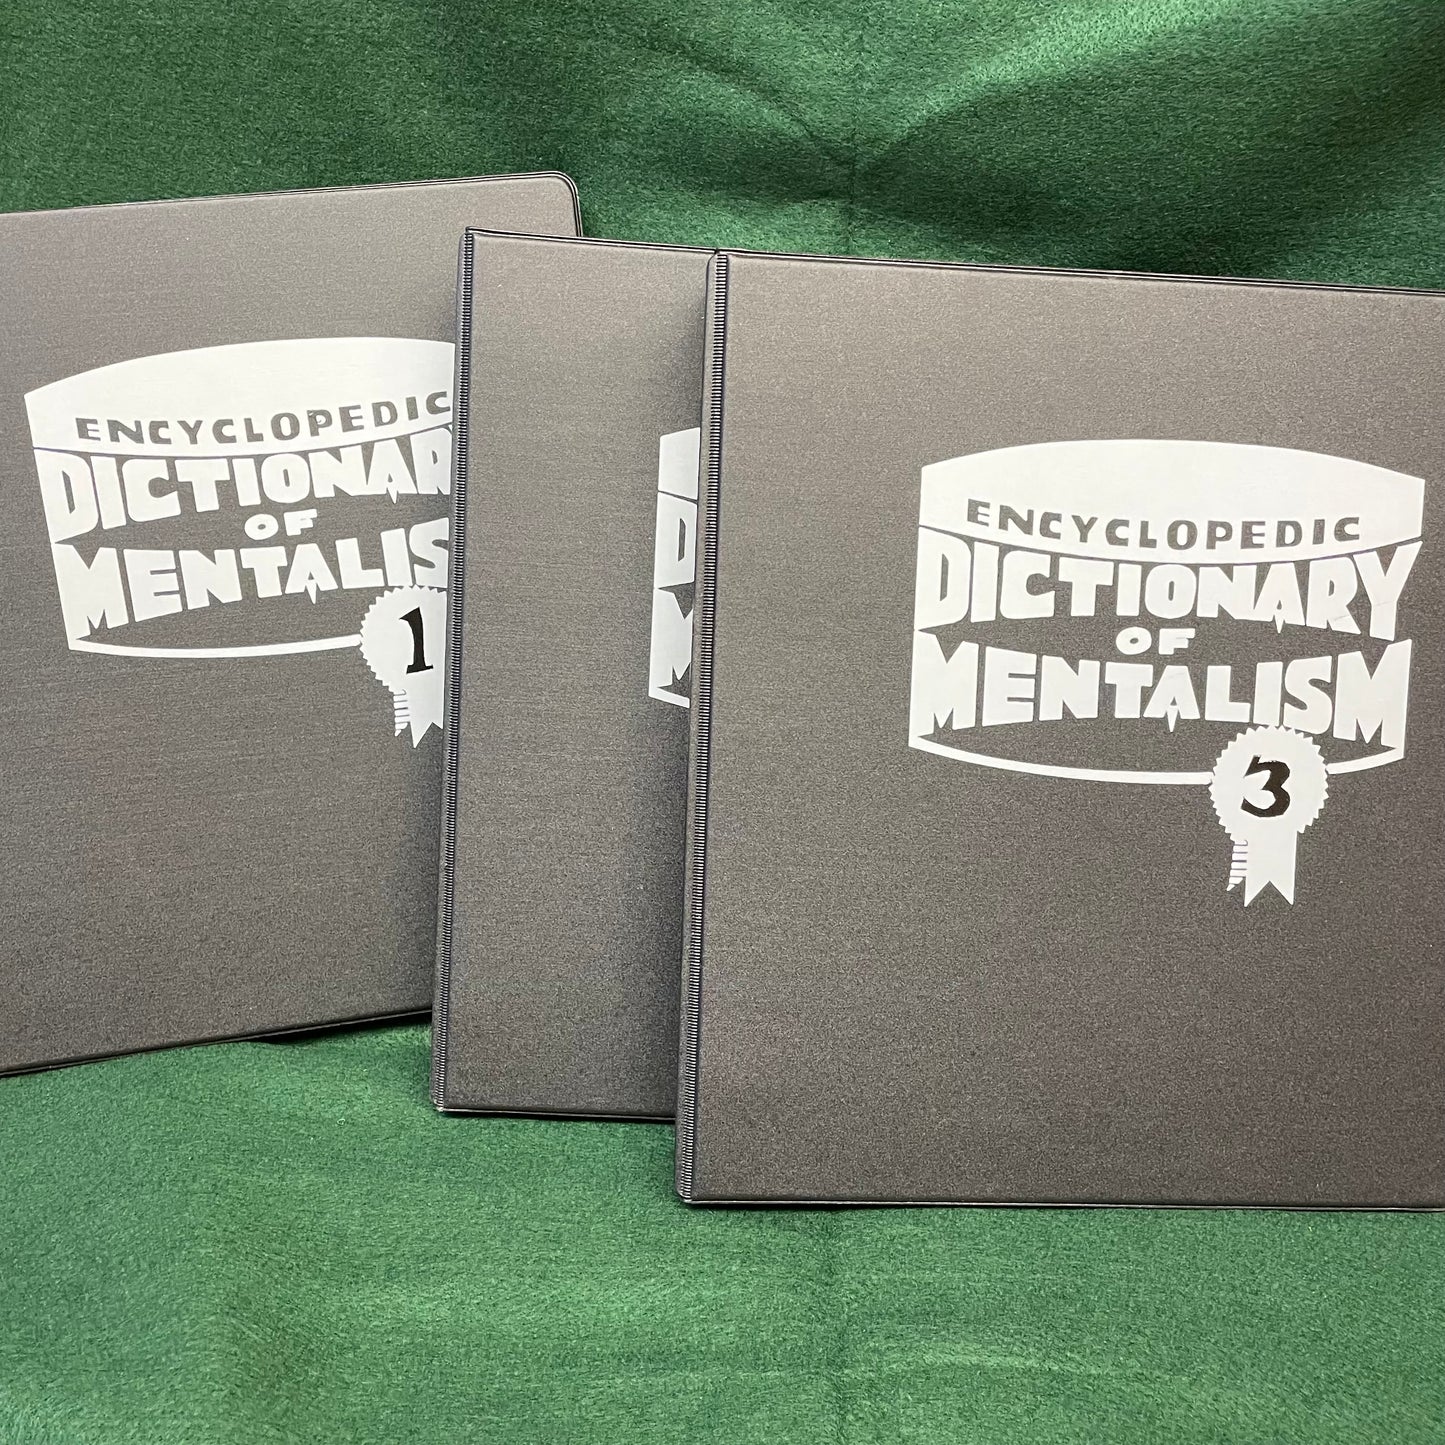 Encyclopedia of Mentalism 3 Volume set